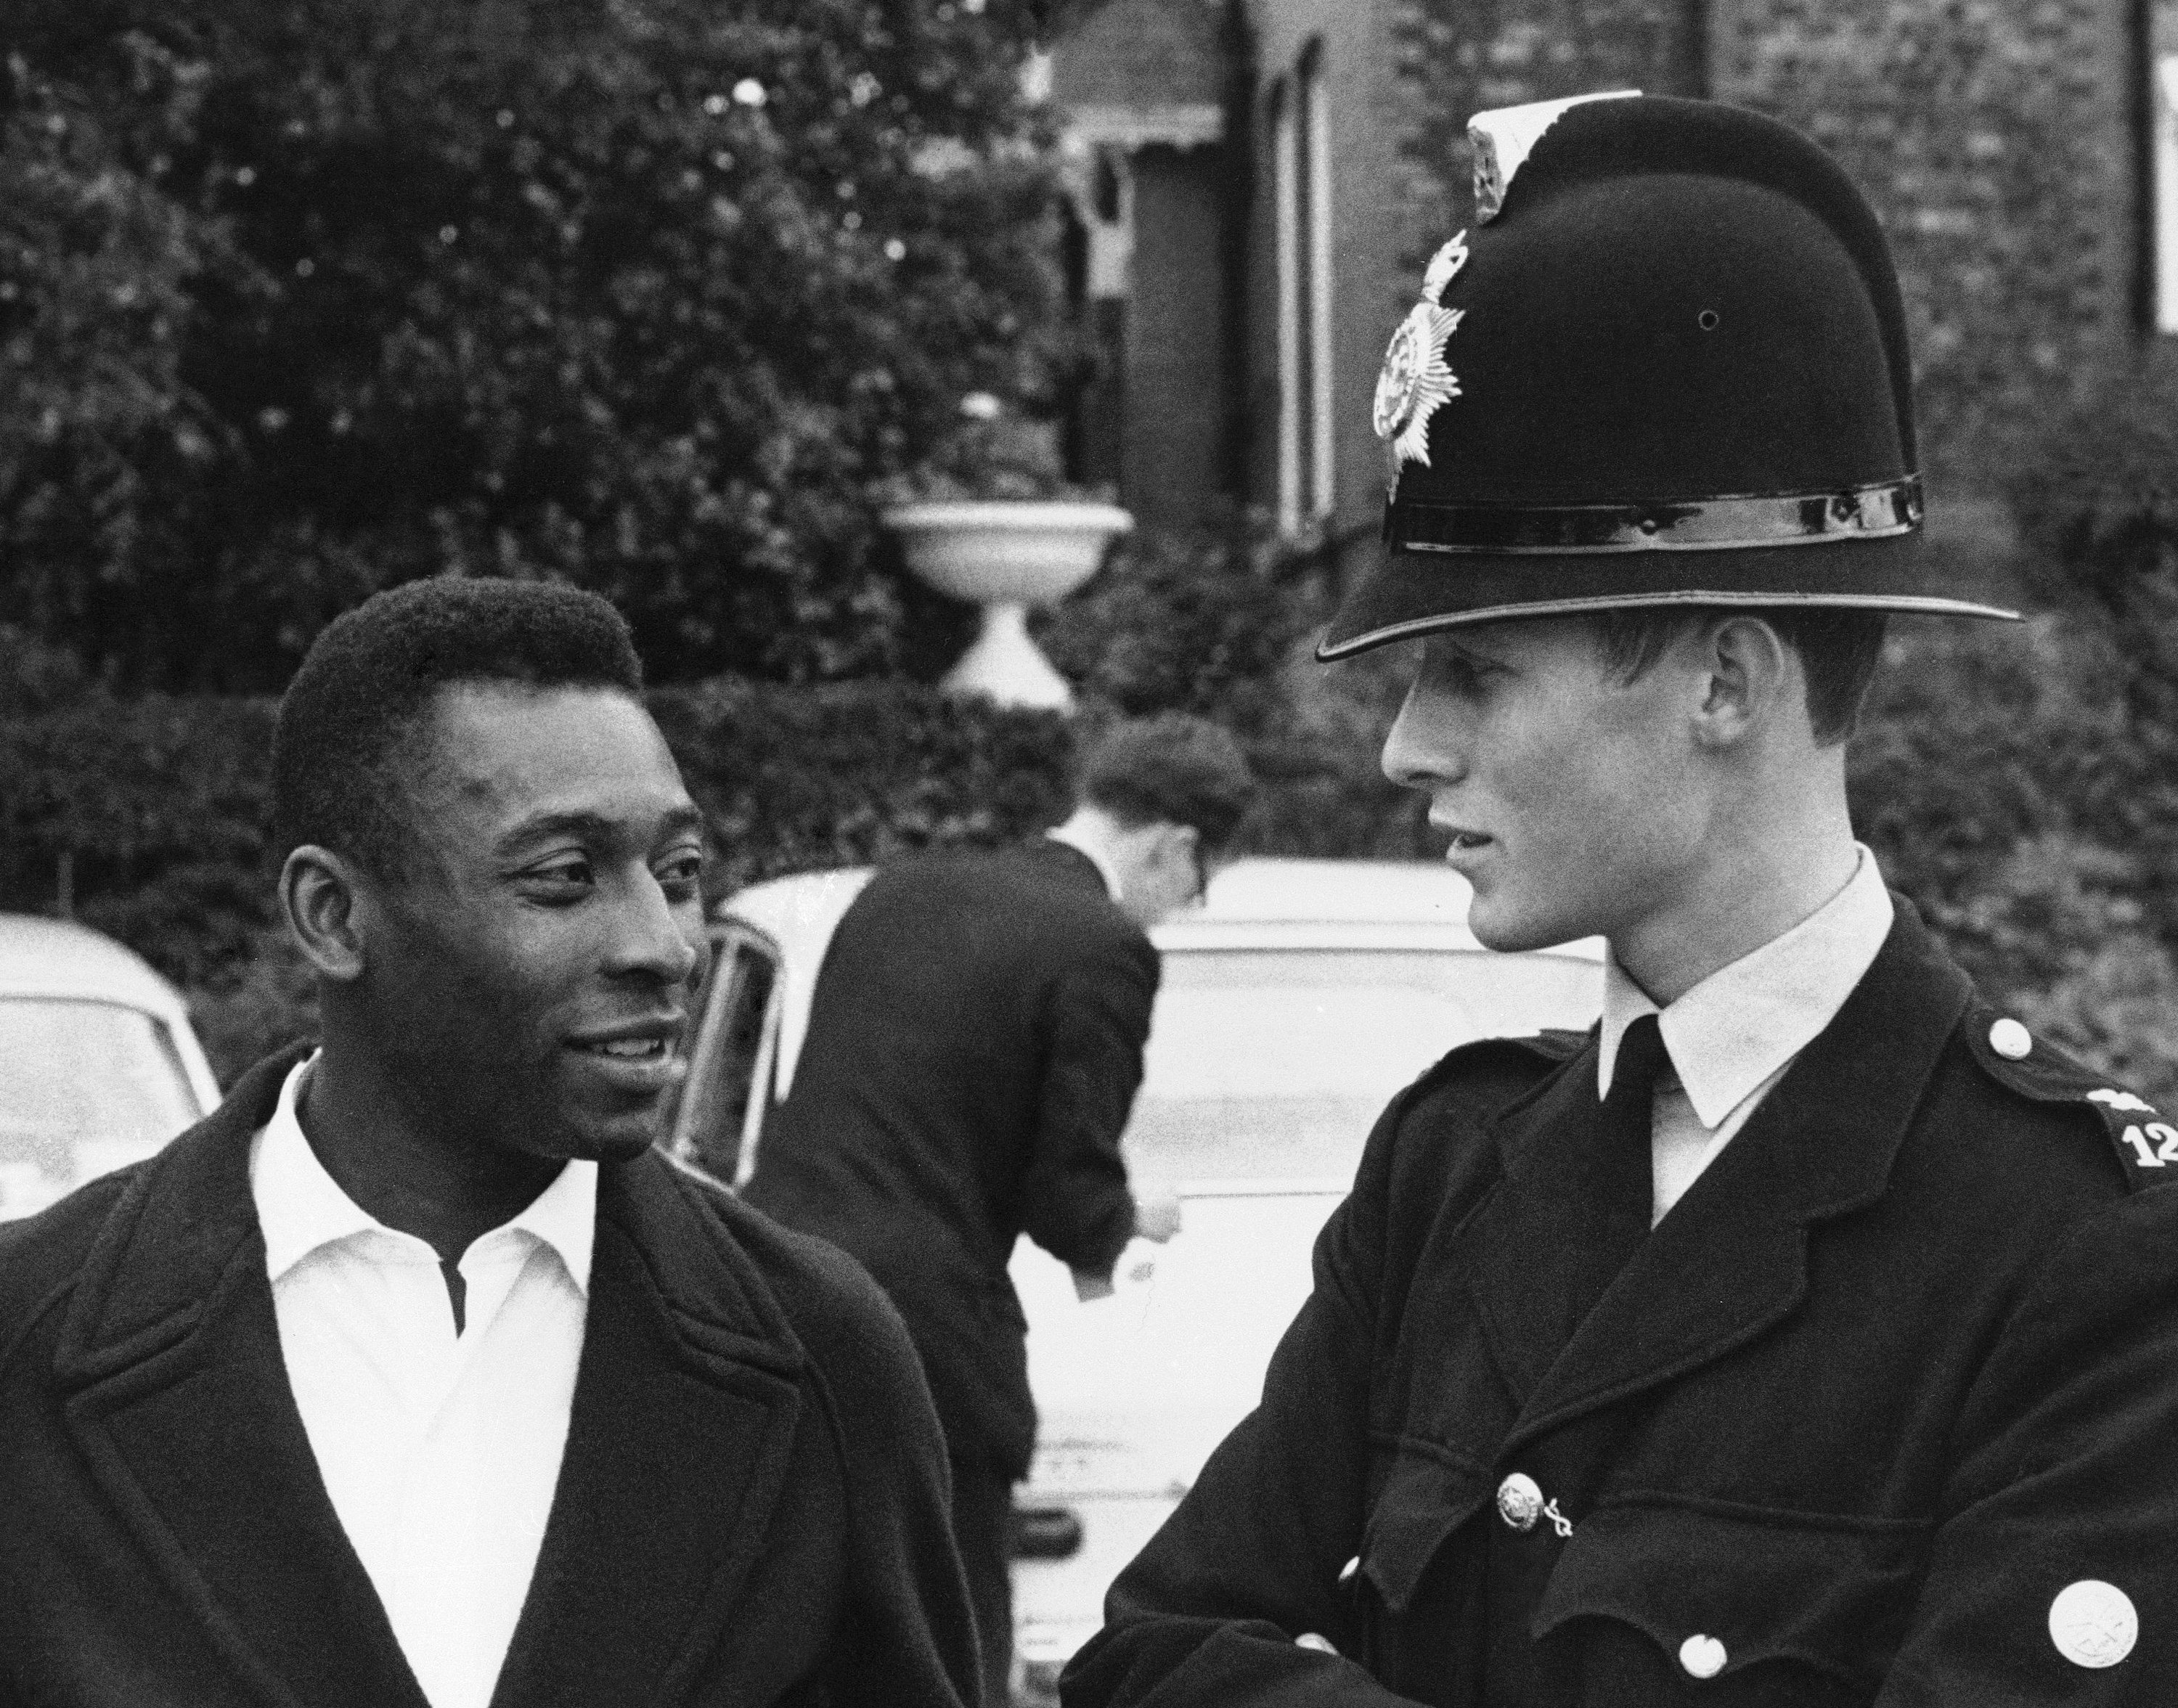 Pemain sepak bola terkenal Pele berbicara untuk mengadakan percakapan dengan seorang polisi setelah tim Brasil tiba di hotel mereka, Chester, Inggris, Juli 1966. (Foto AP)